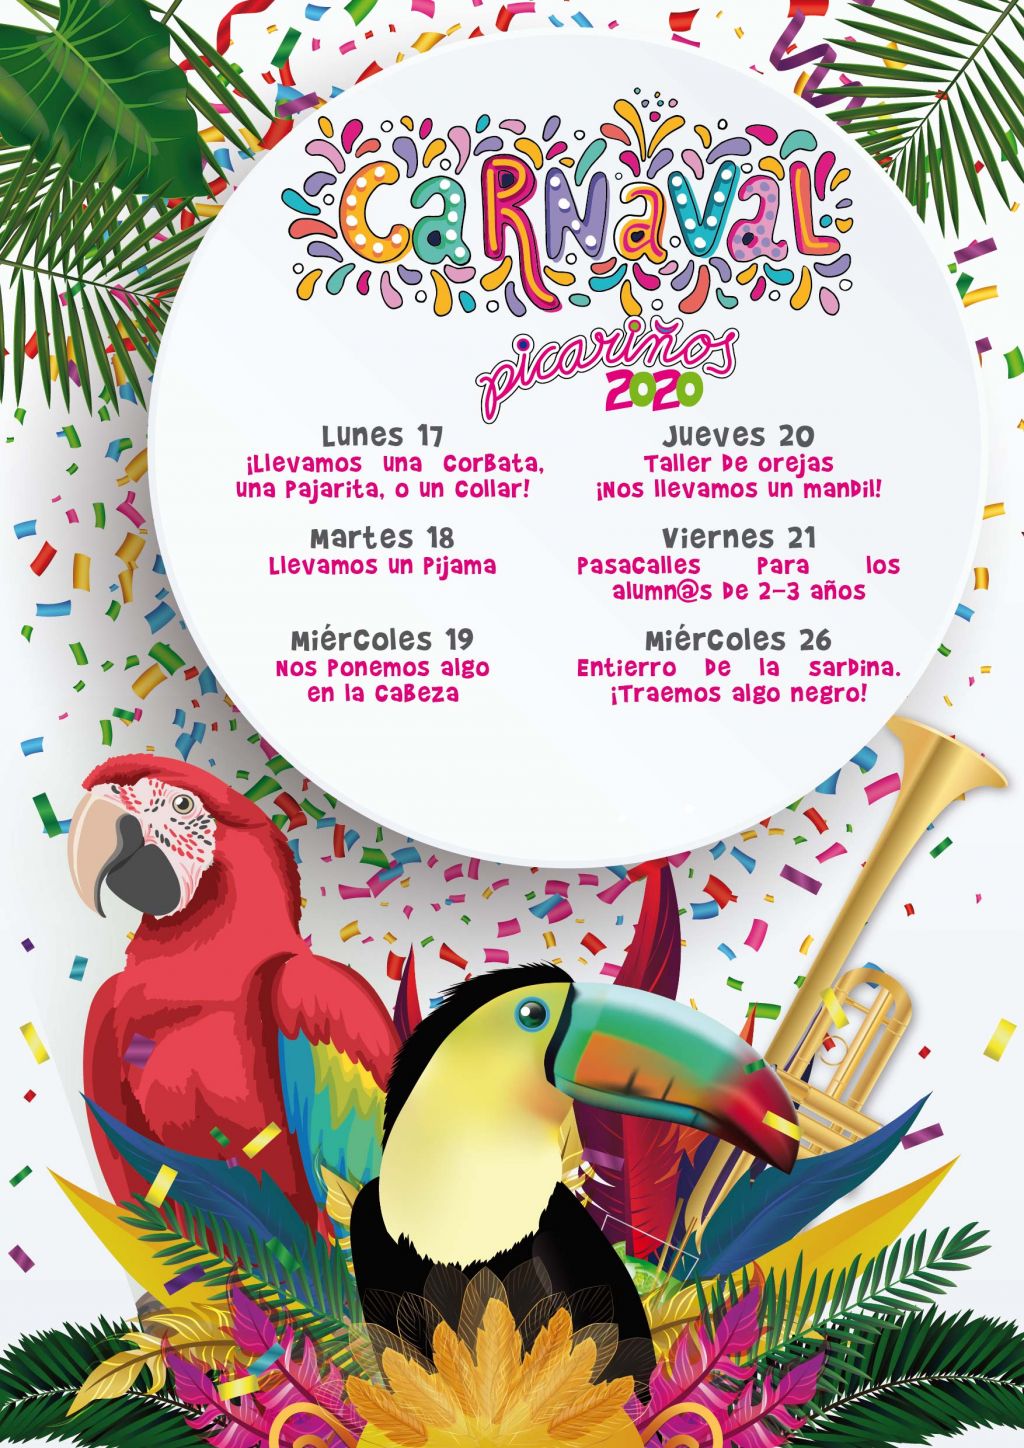 Carnaval 2020 en Picariños